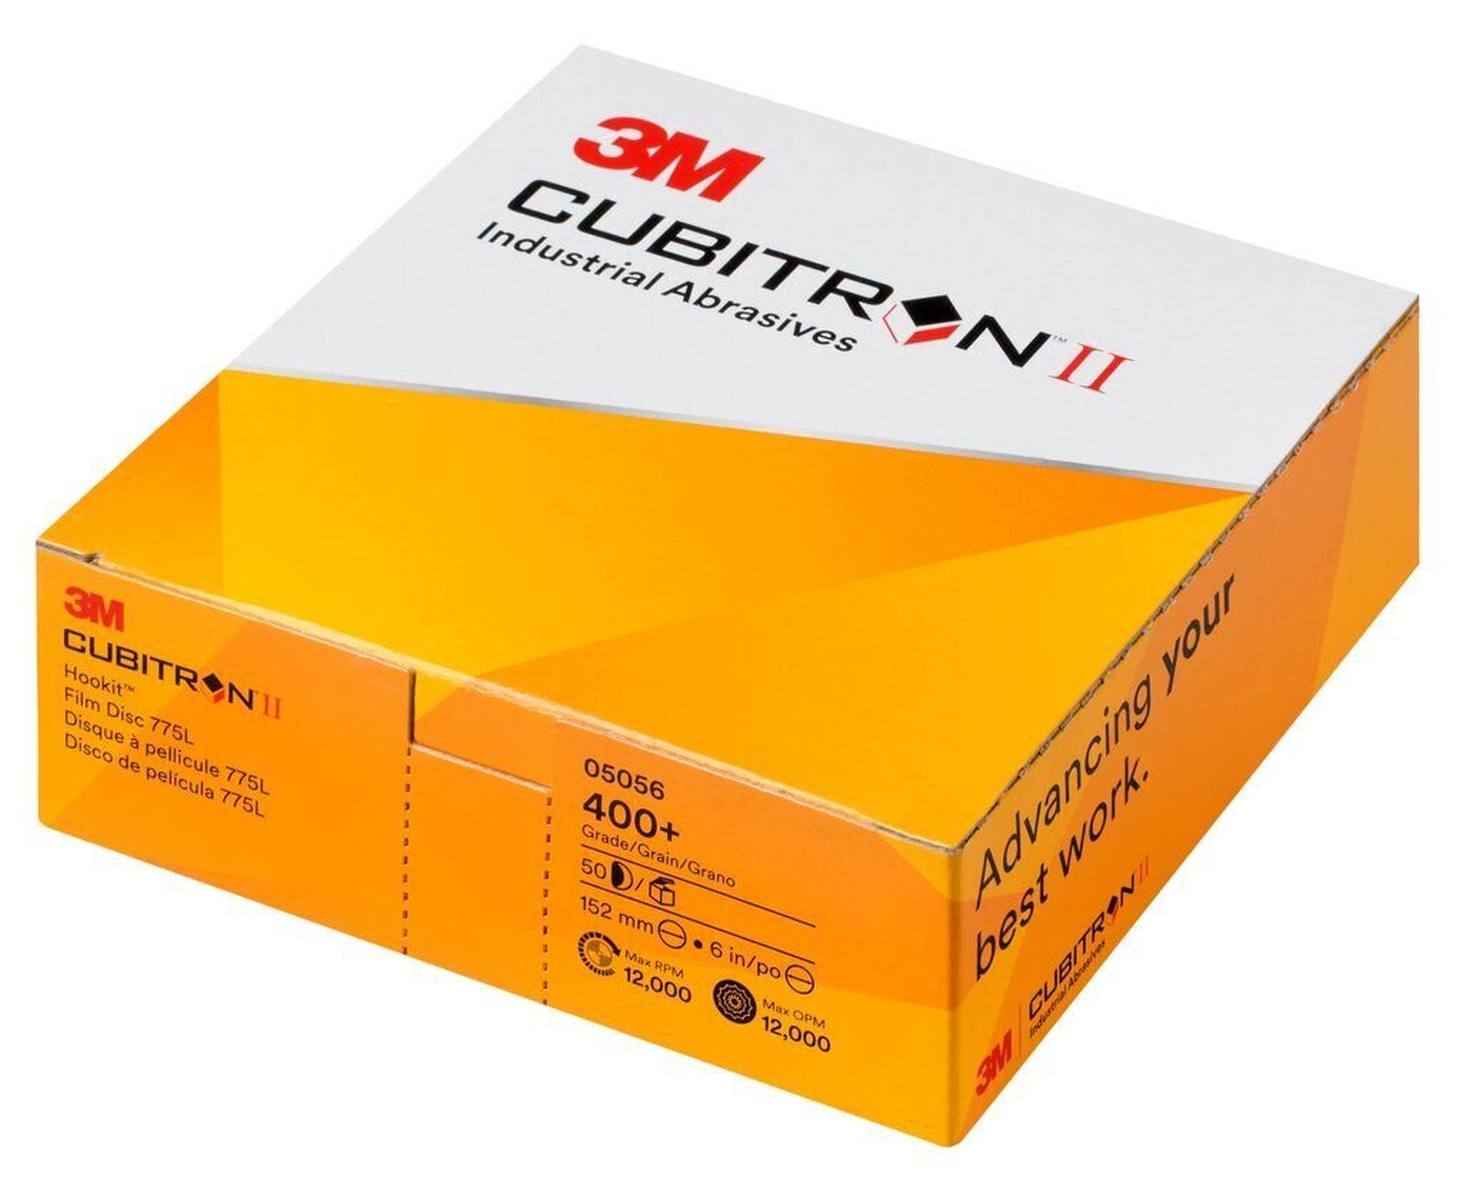 3M Cubitron II Hookit film disk 775L, 150 mm, 400 , multihole #05059